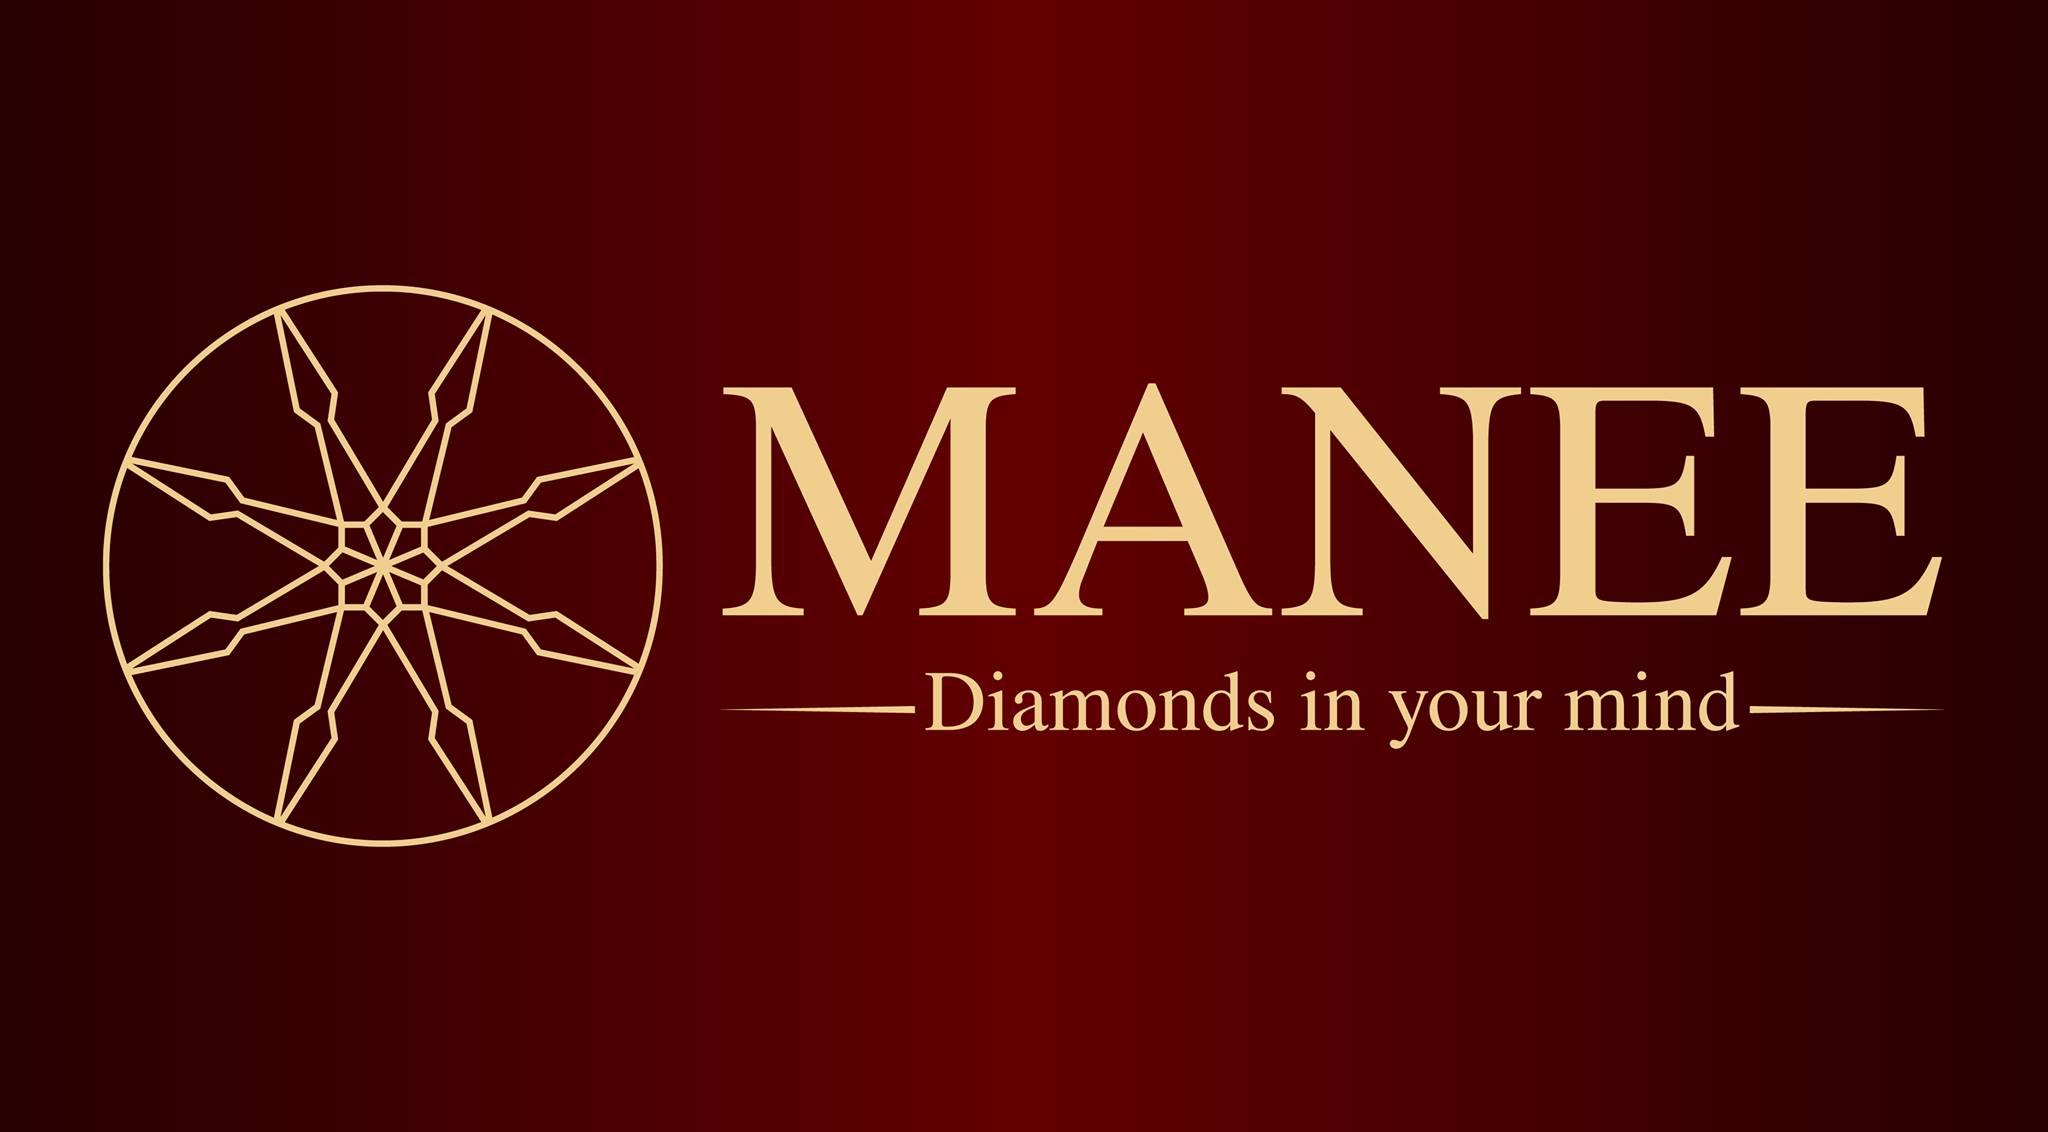 Buy Loose Diamonds | Best Place to Buy Loose Diamonds - Diamonds by Manee